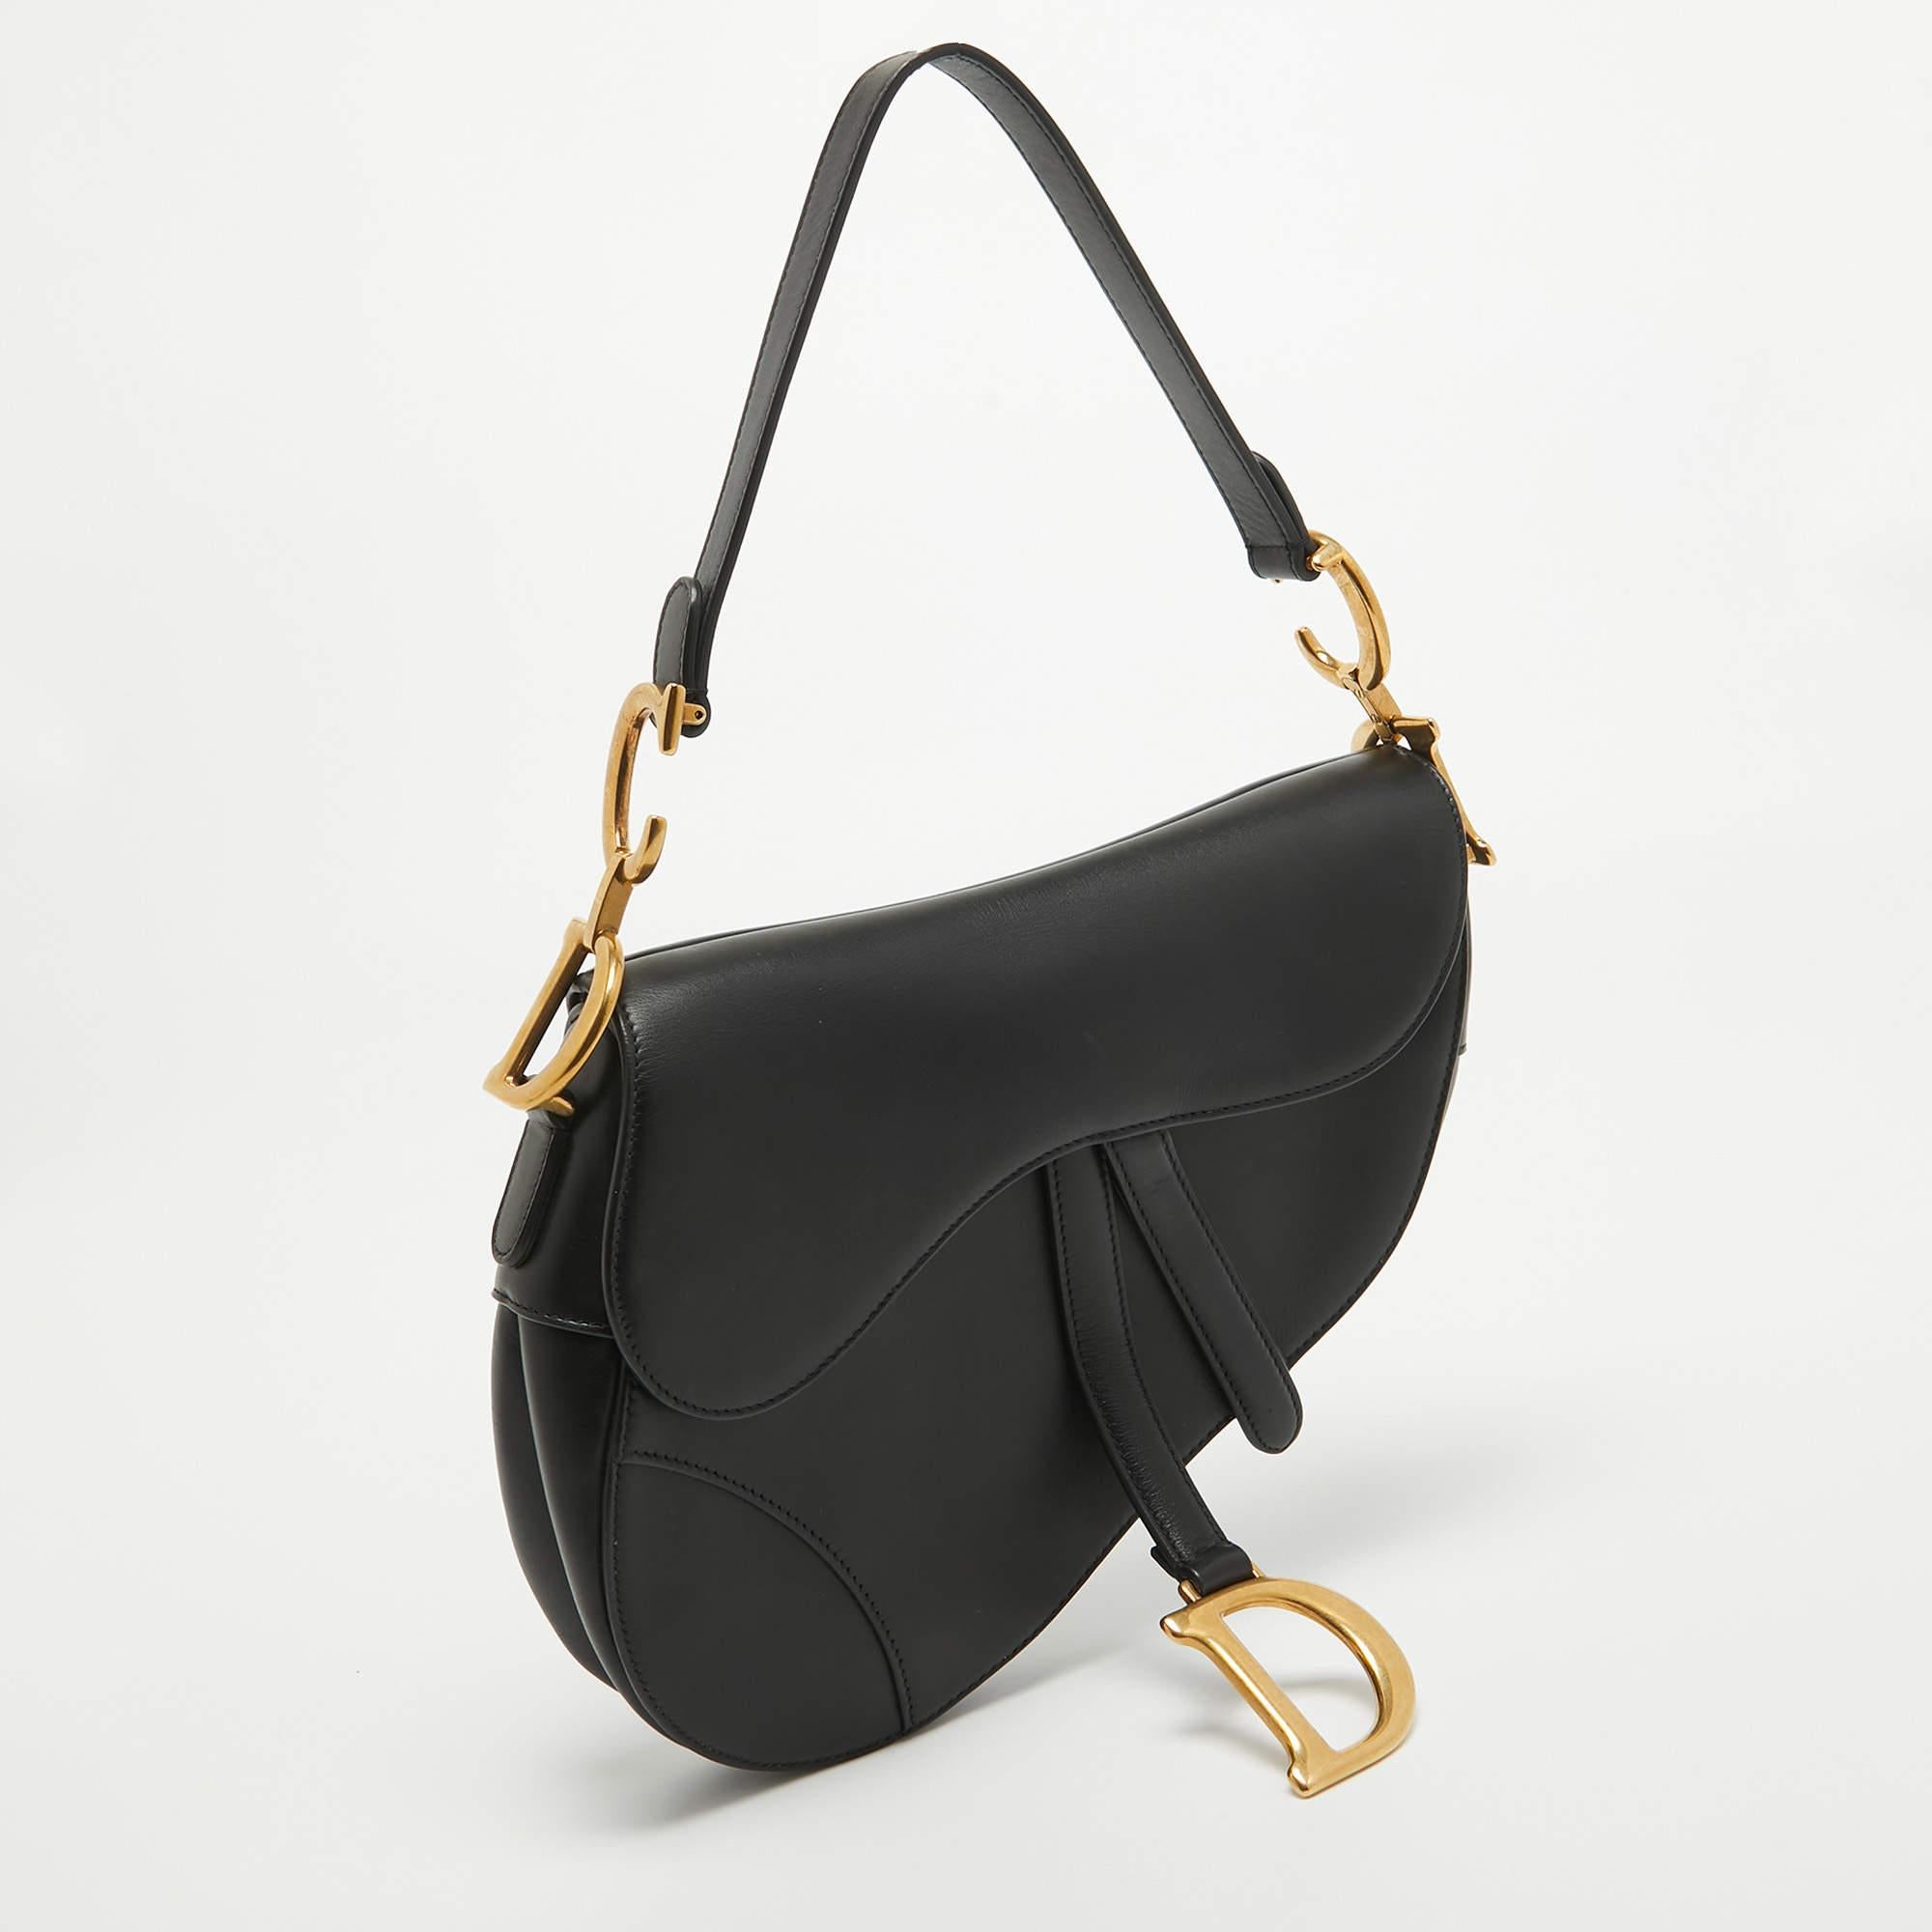 Dior Black Leather Saddle Bag In Good Condition For Sale In Dubai, Al Qouz 2